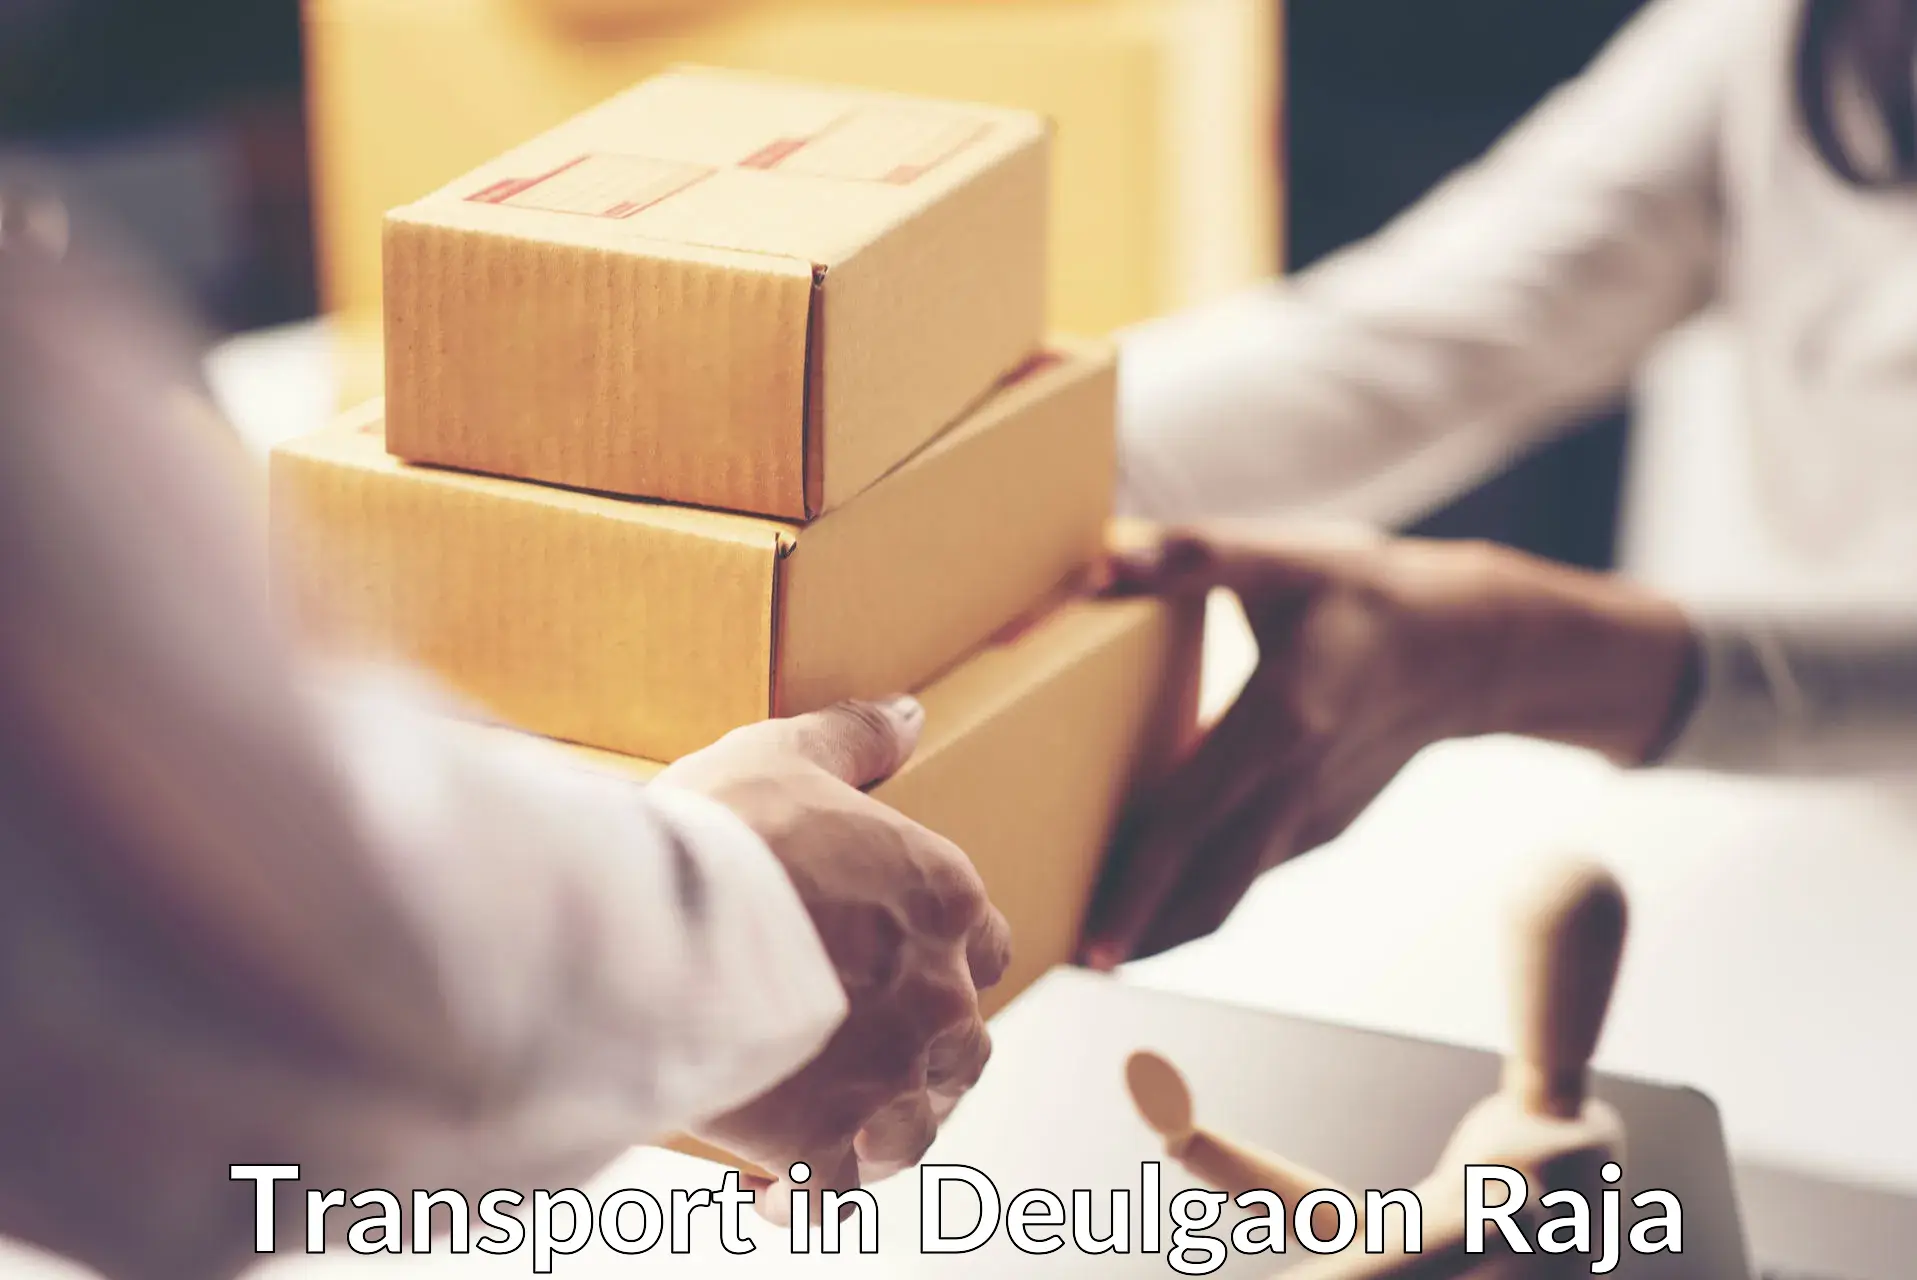 Container transportation services in Deulgaon Raja